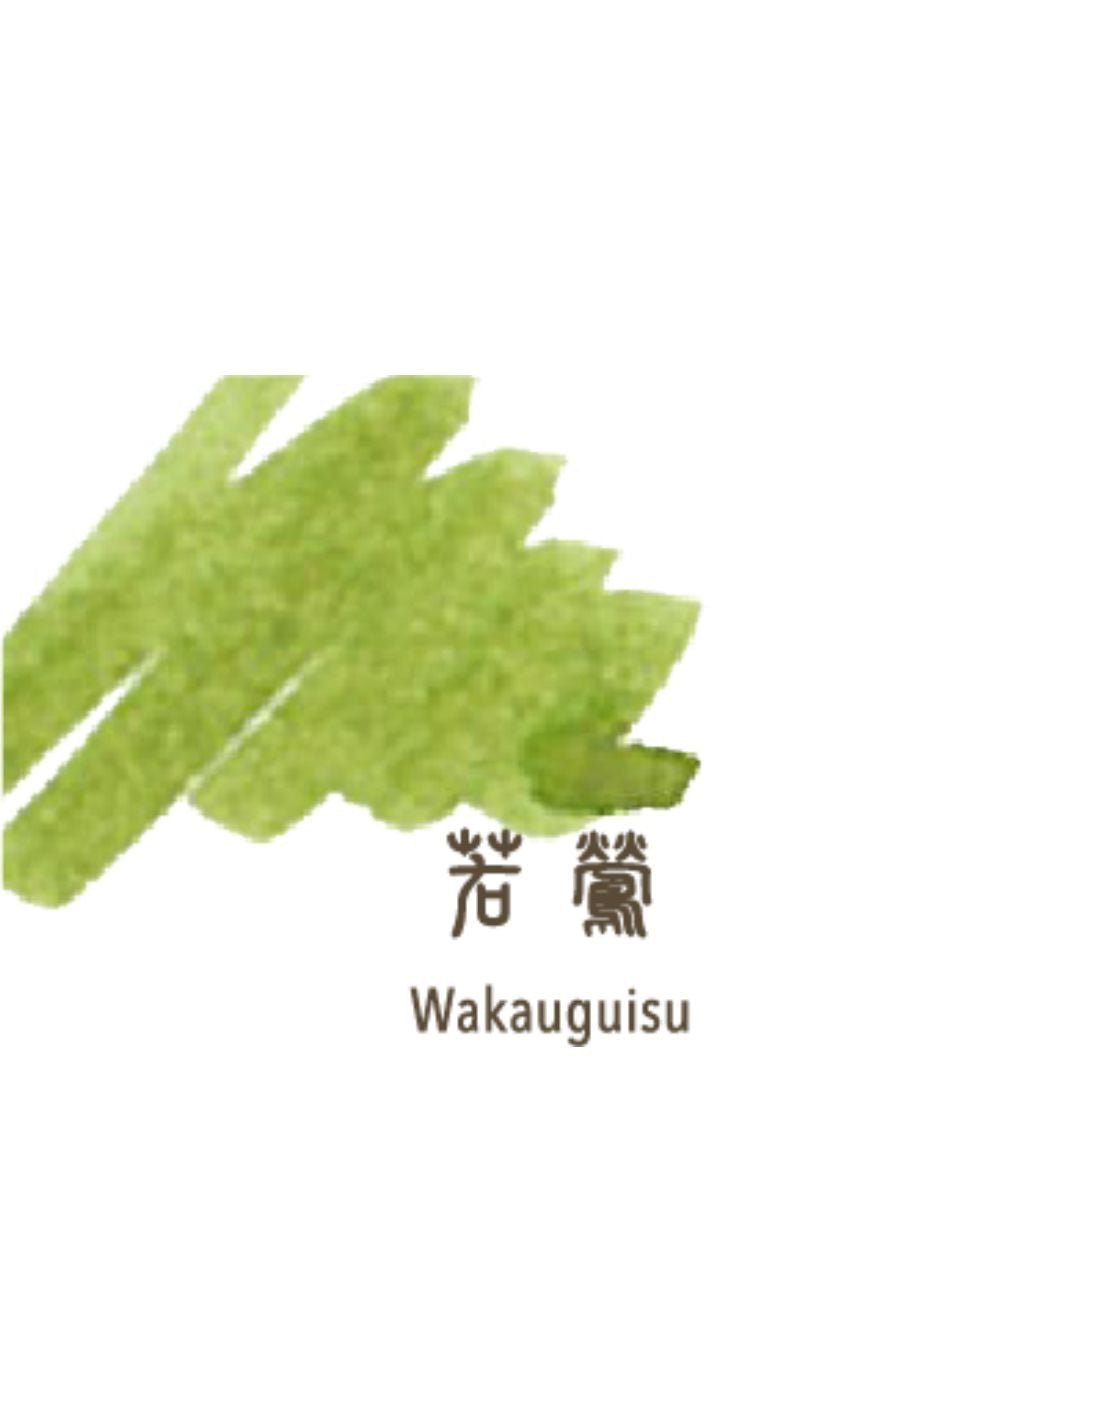 Cartouches d'encre SAILOR Shikiori - 20 ml - Wakauguisu - 4901680189114